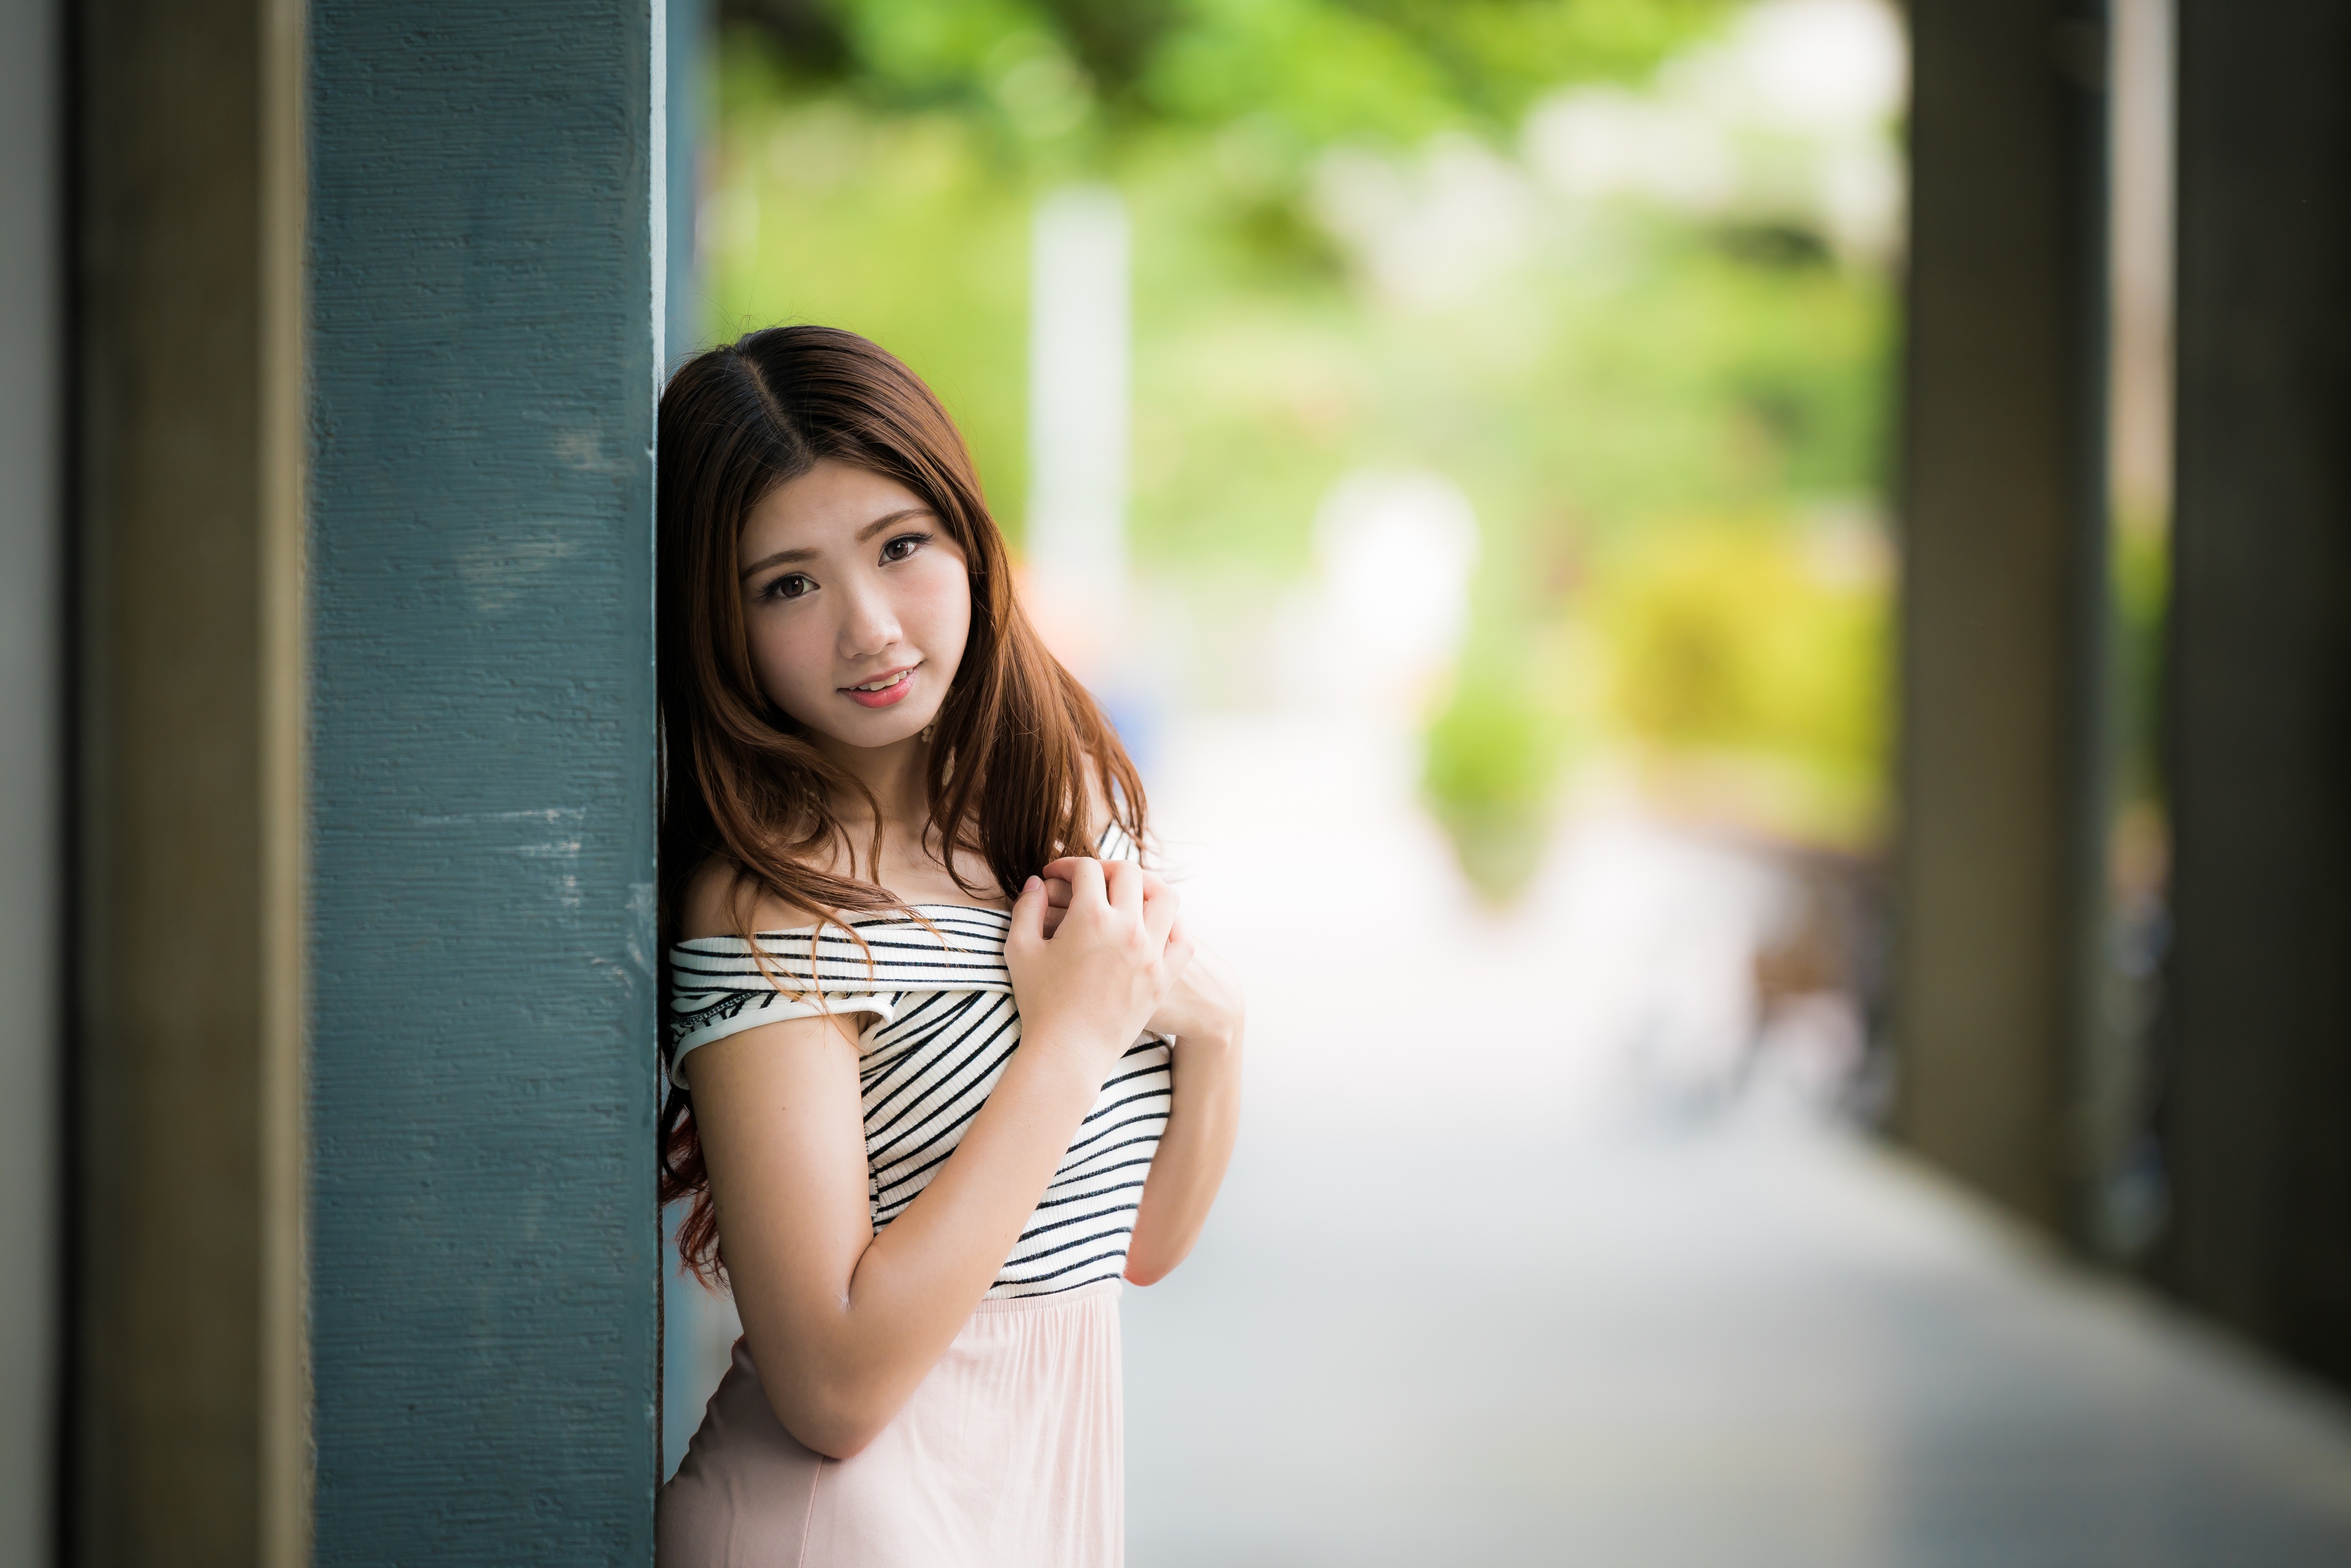 Asian Women Brunette Smiling Women Outdoors Striped Clothing Portrait Portrait Hands On Chest Long H 4500x3002